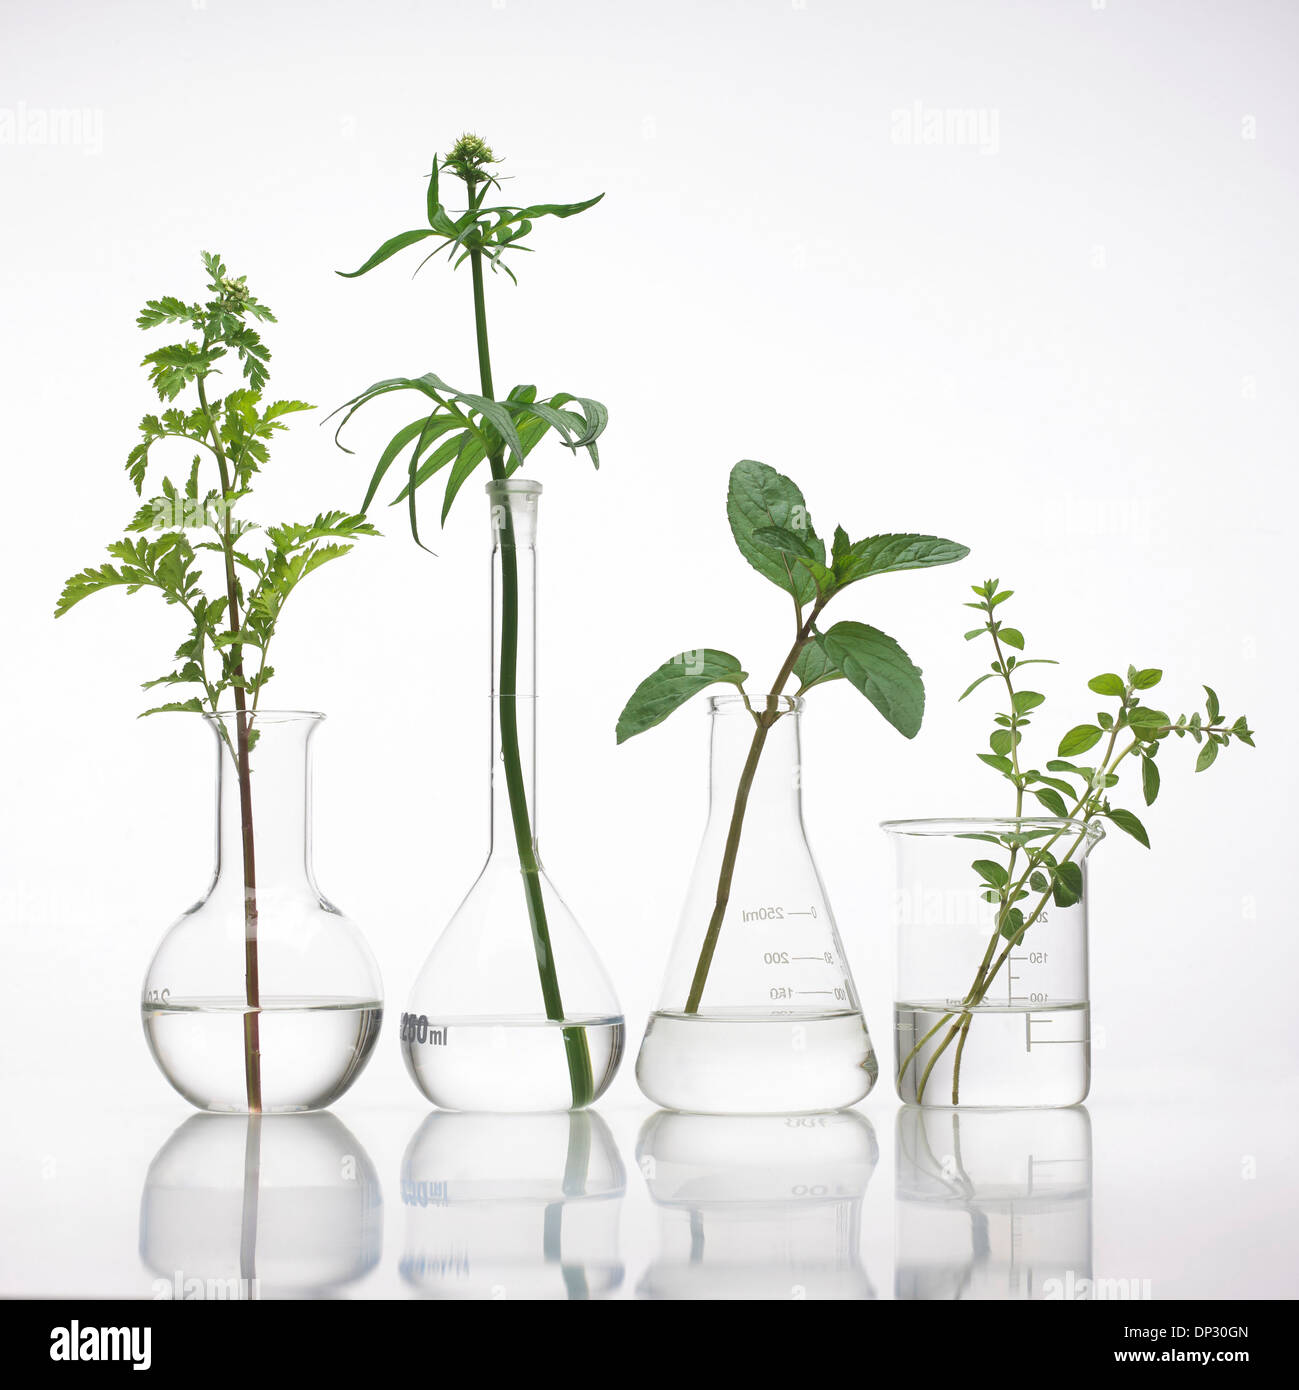 Medicinal plants, conceptual image Stock Photo